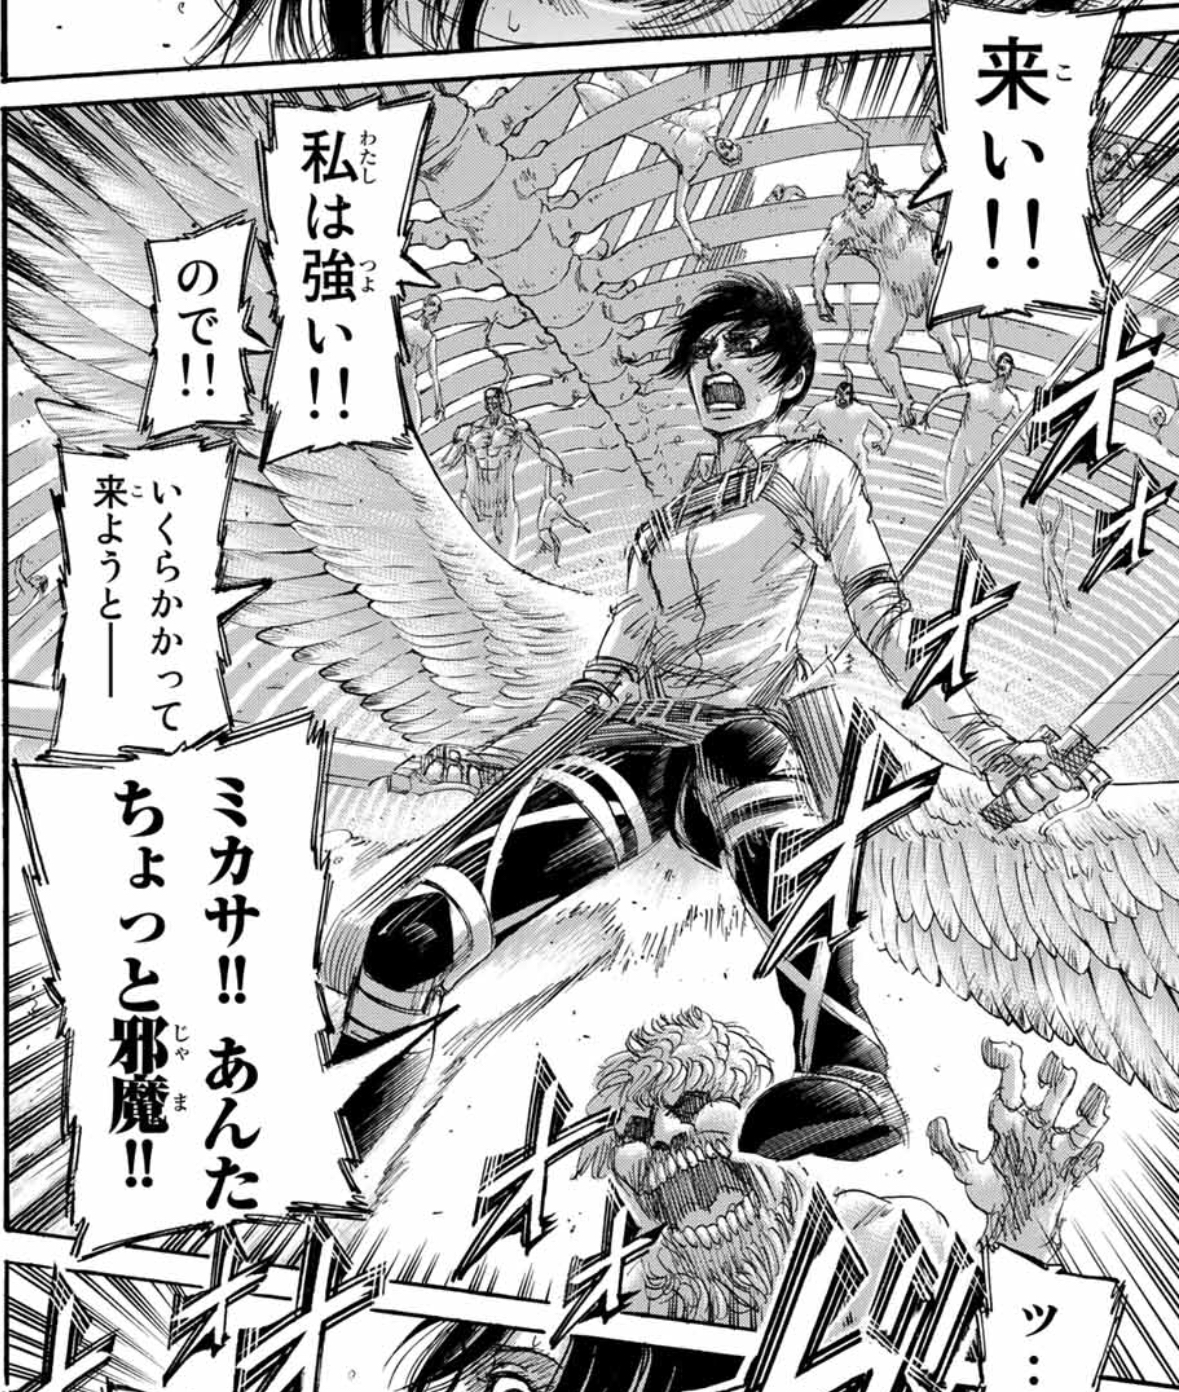 Attack on Titan Manga Meta: Chapter 135 Review - Hana's Blog